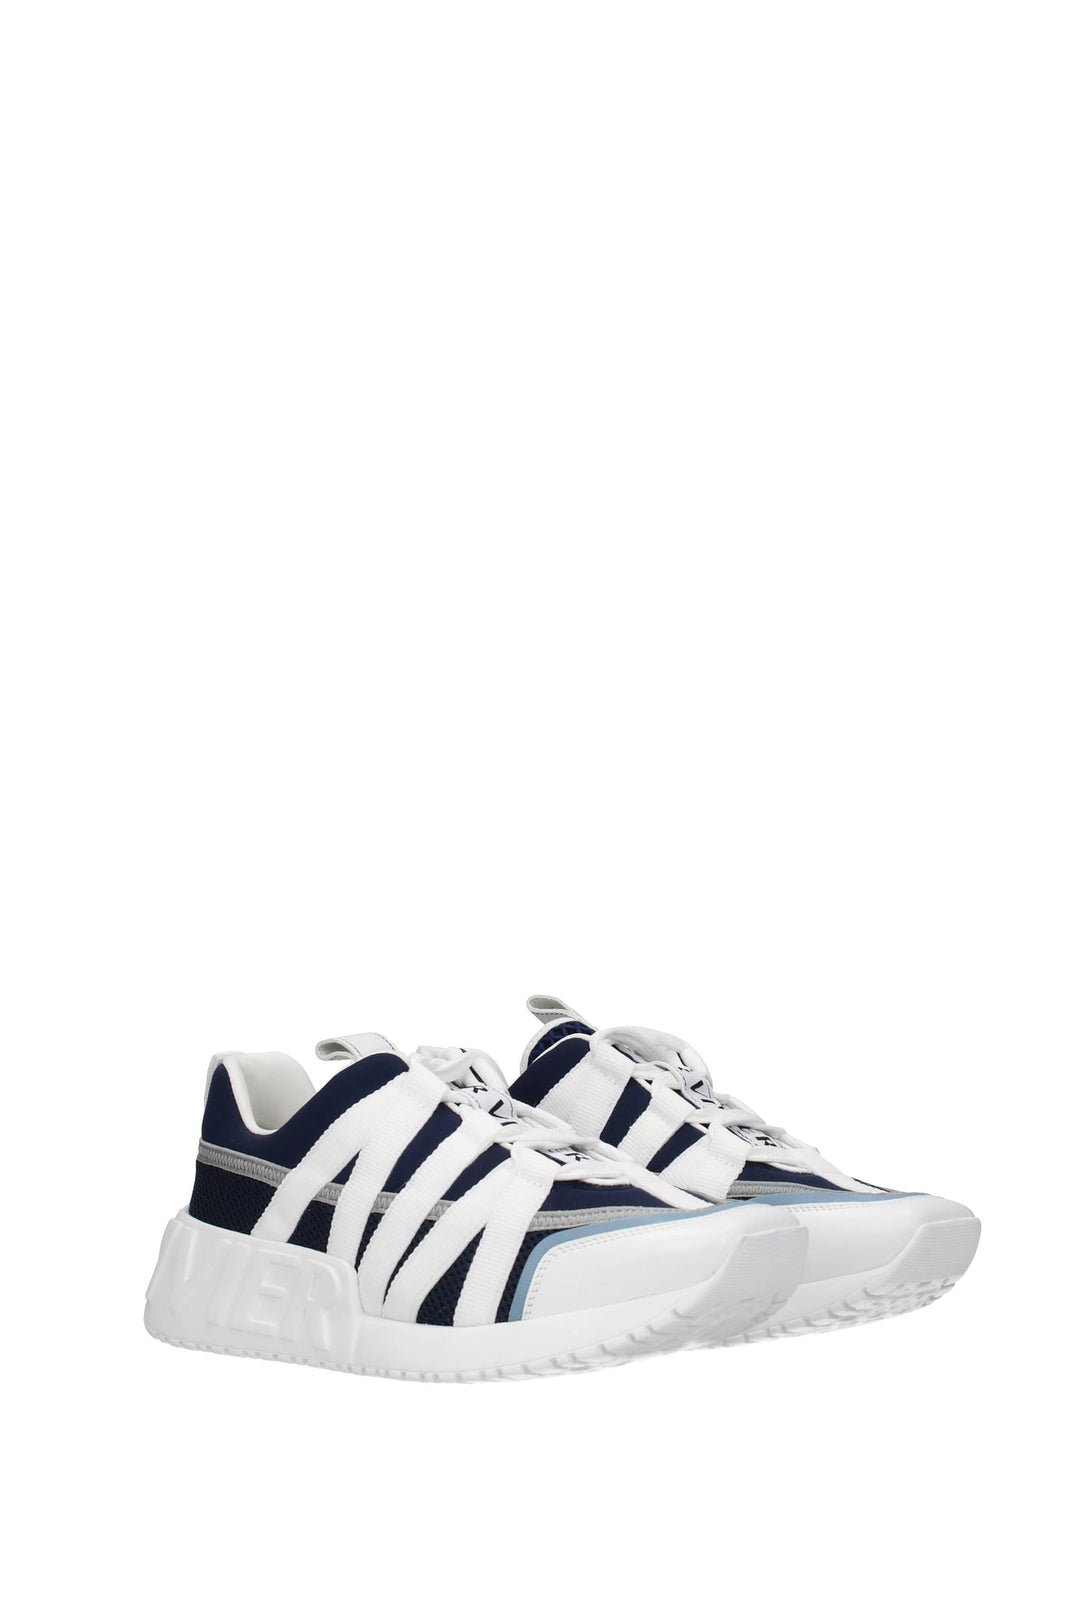 Sneakers Tessuto Bianco Blu Scuro - Roger Vivier - Donna